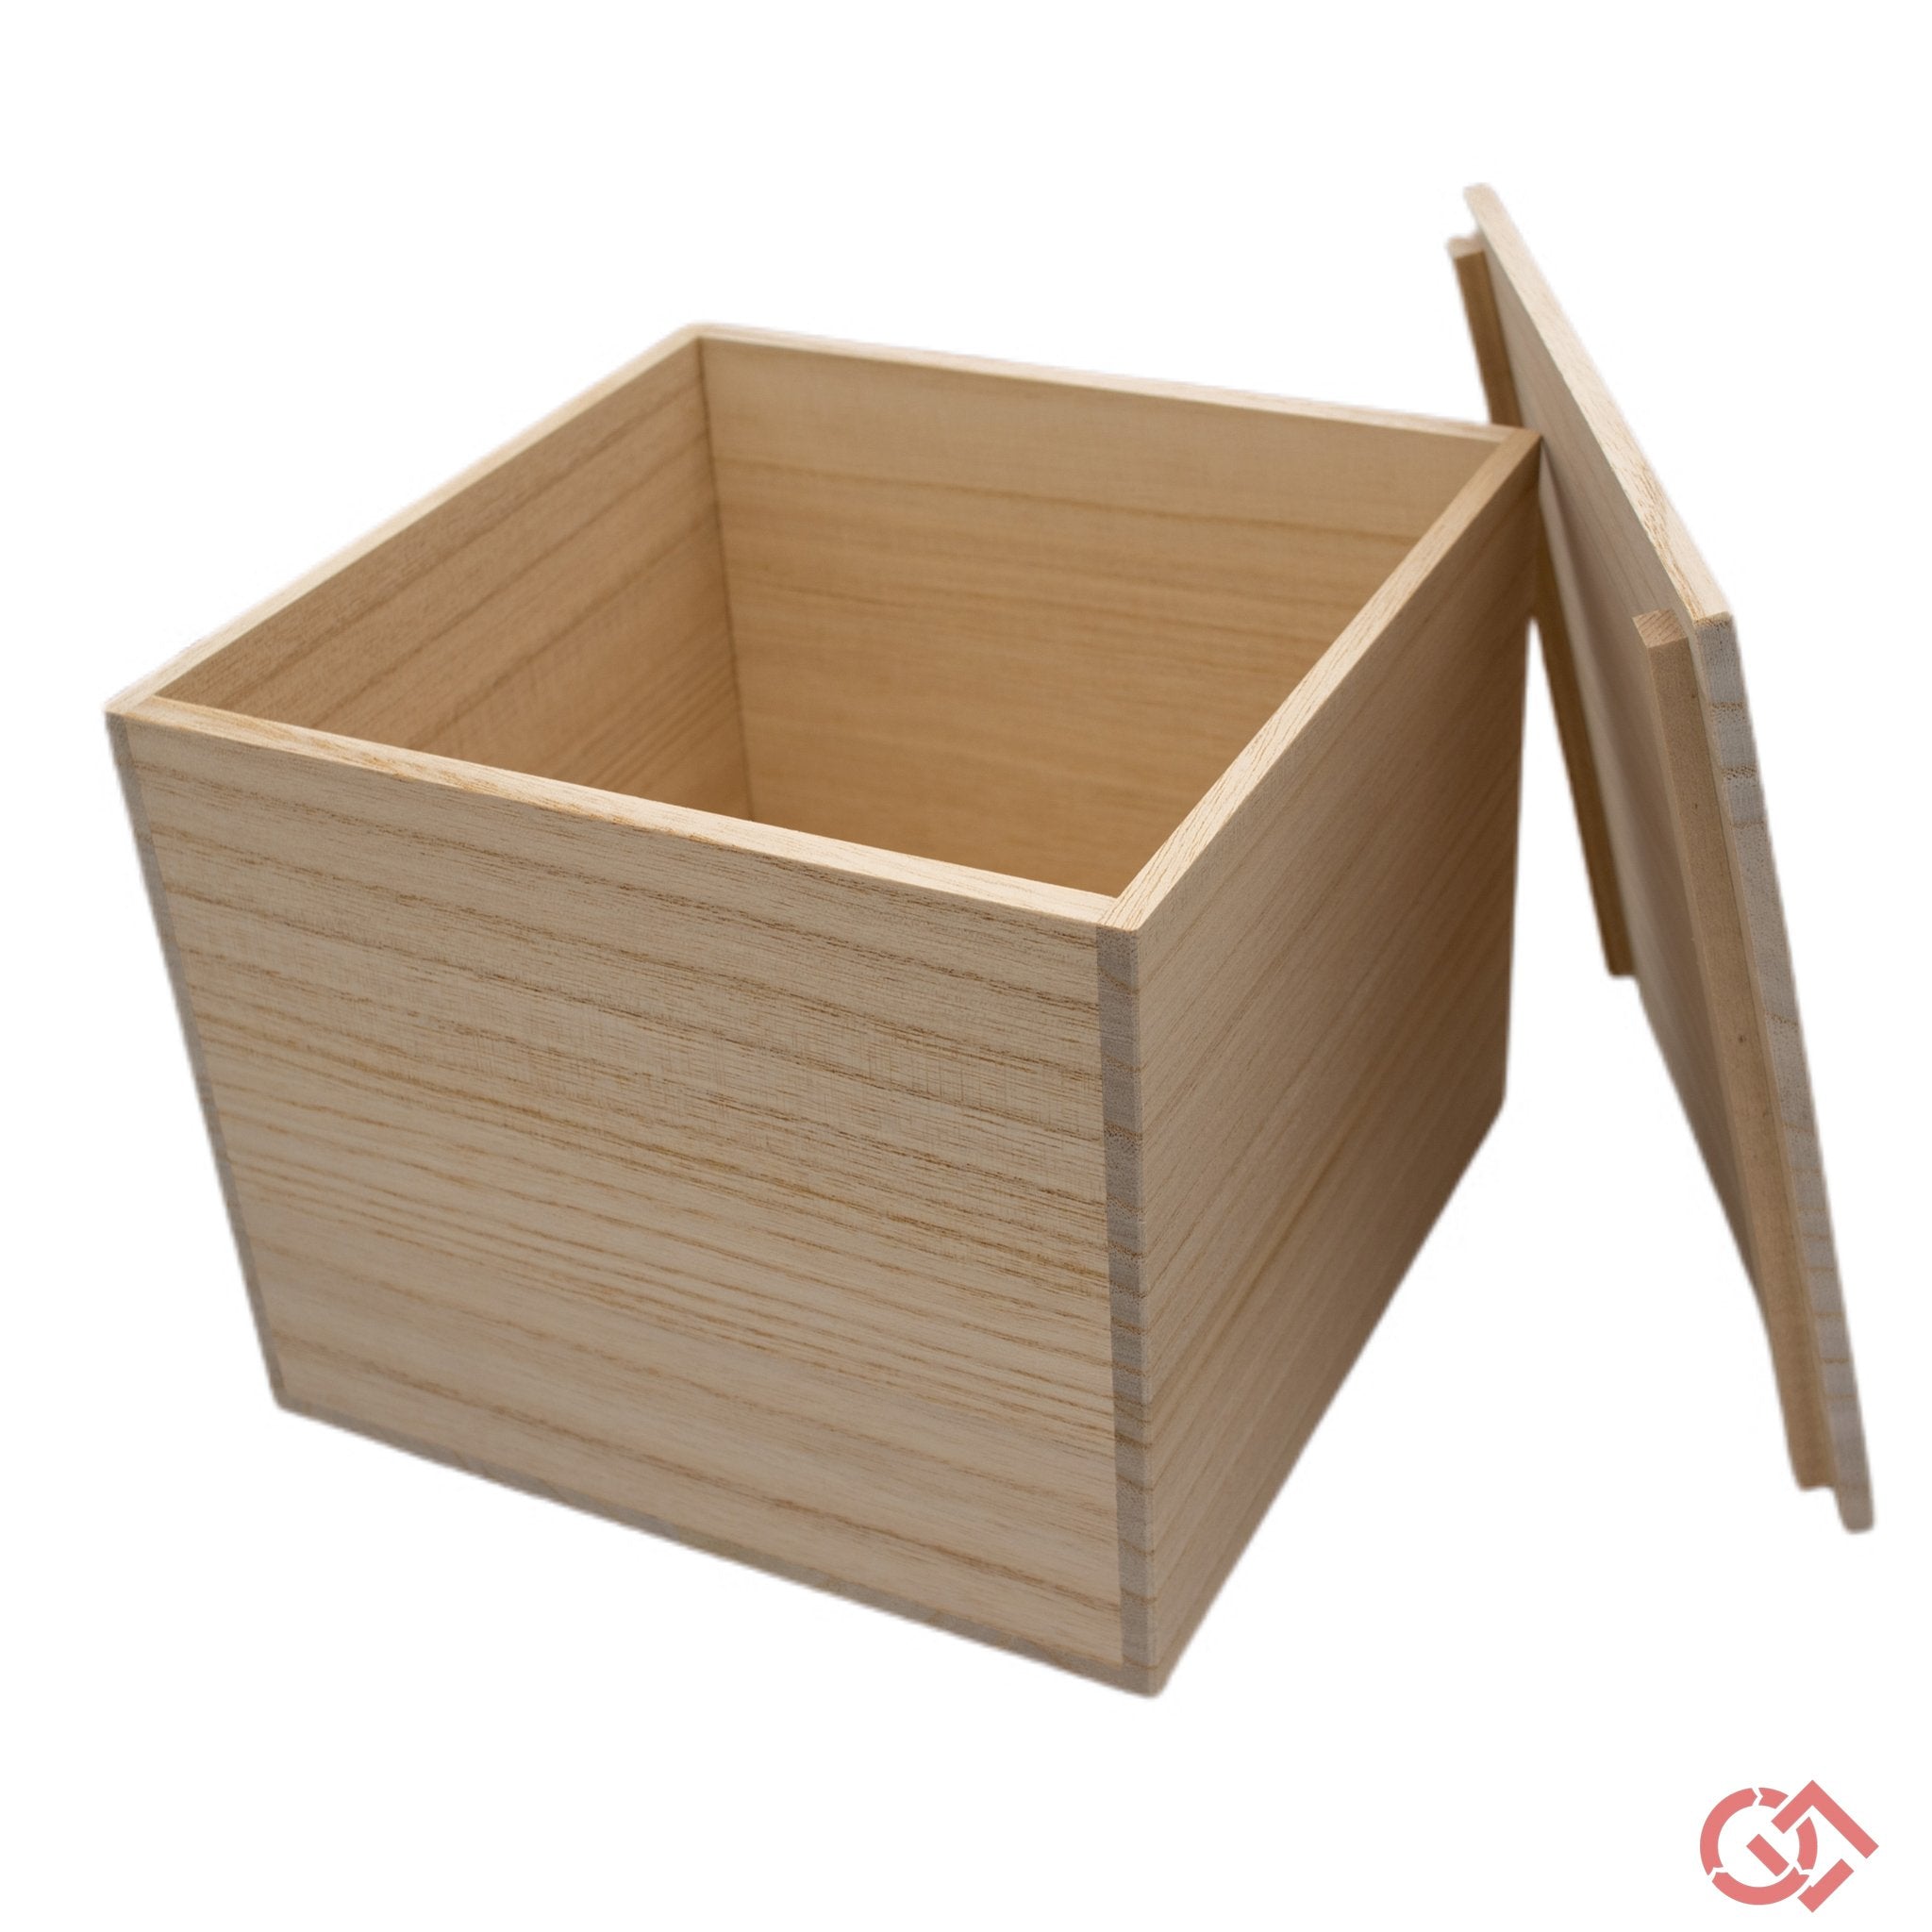 Paulownia wood box for Kintsugi